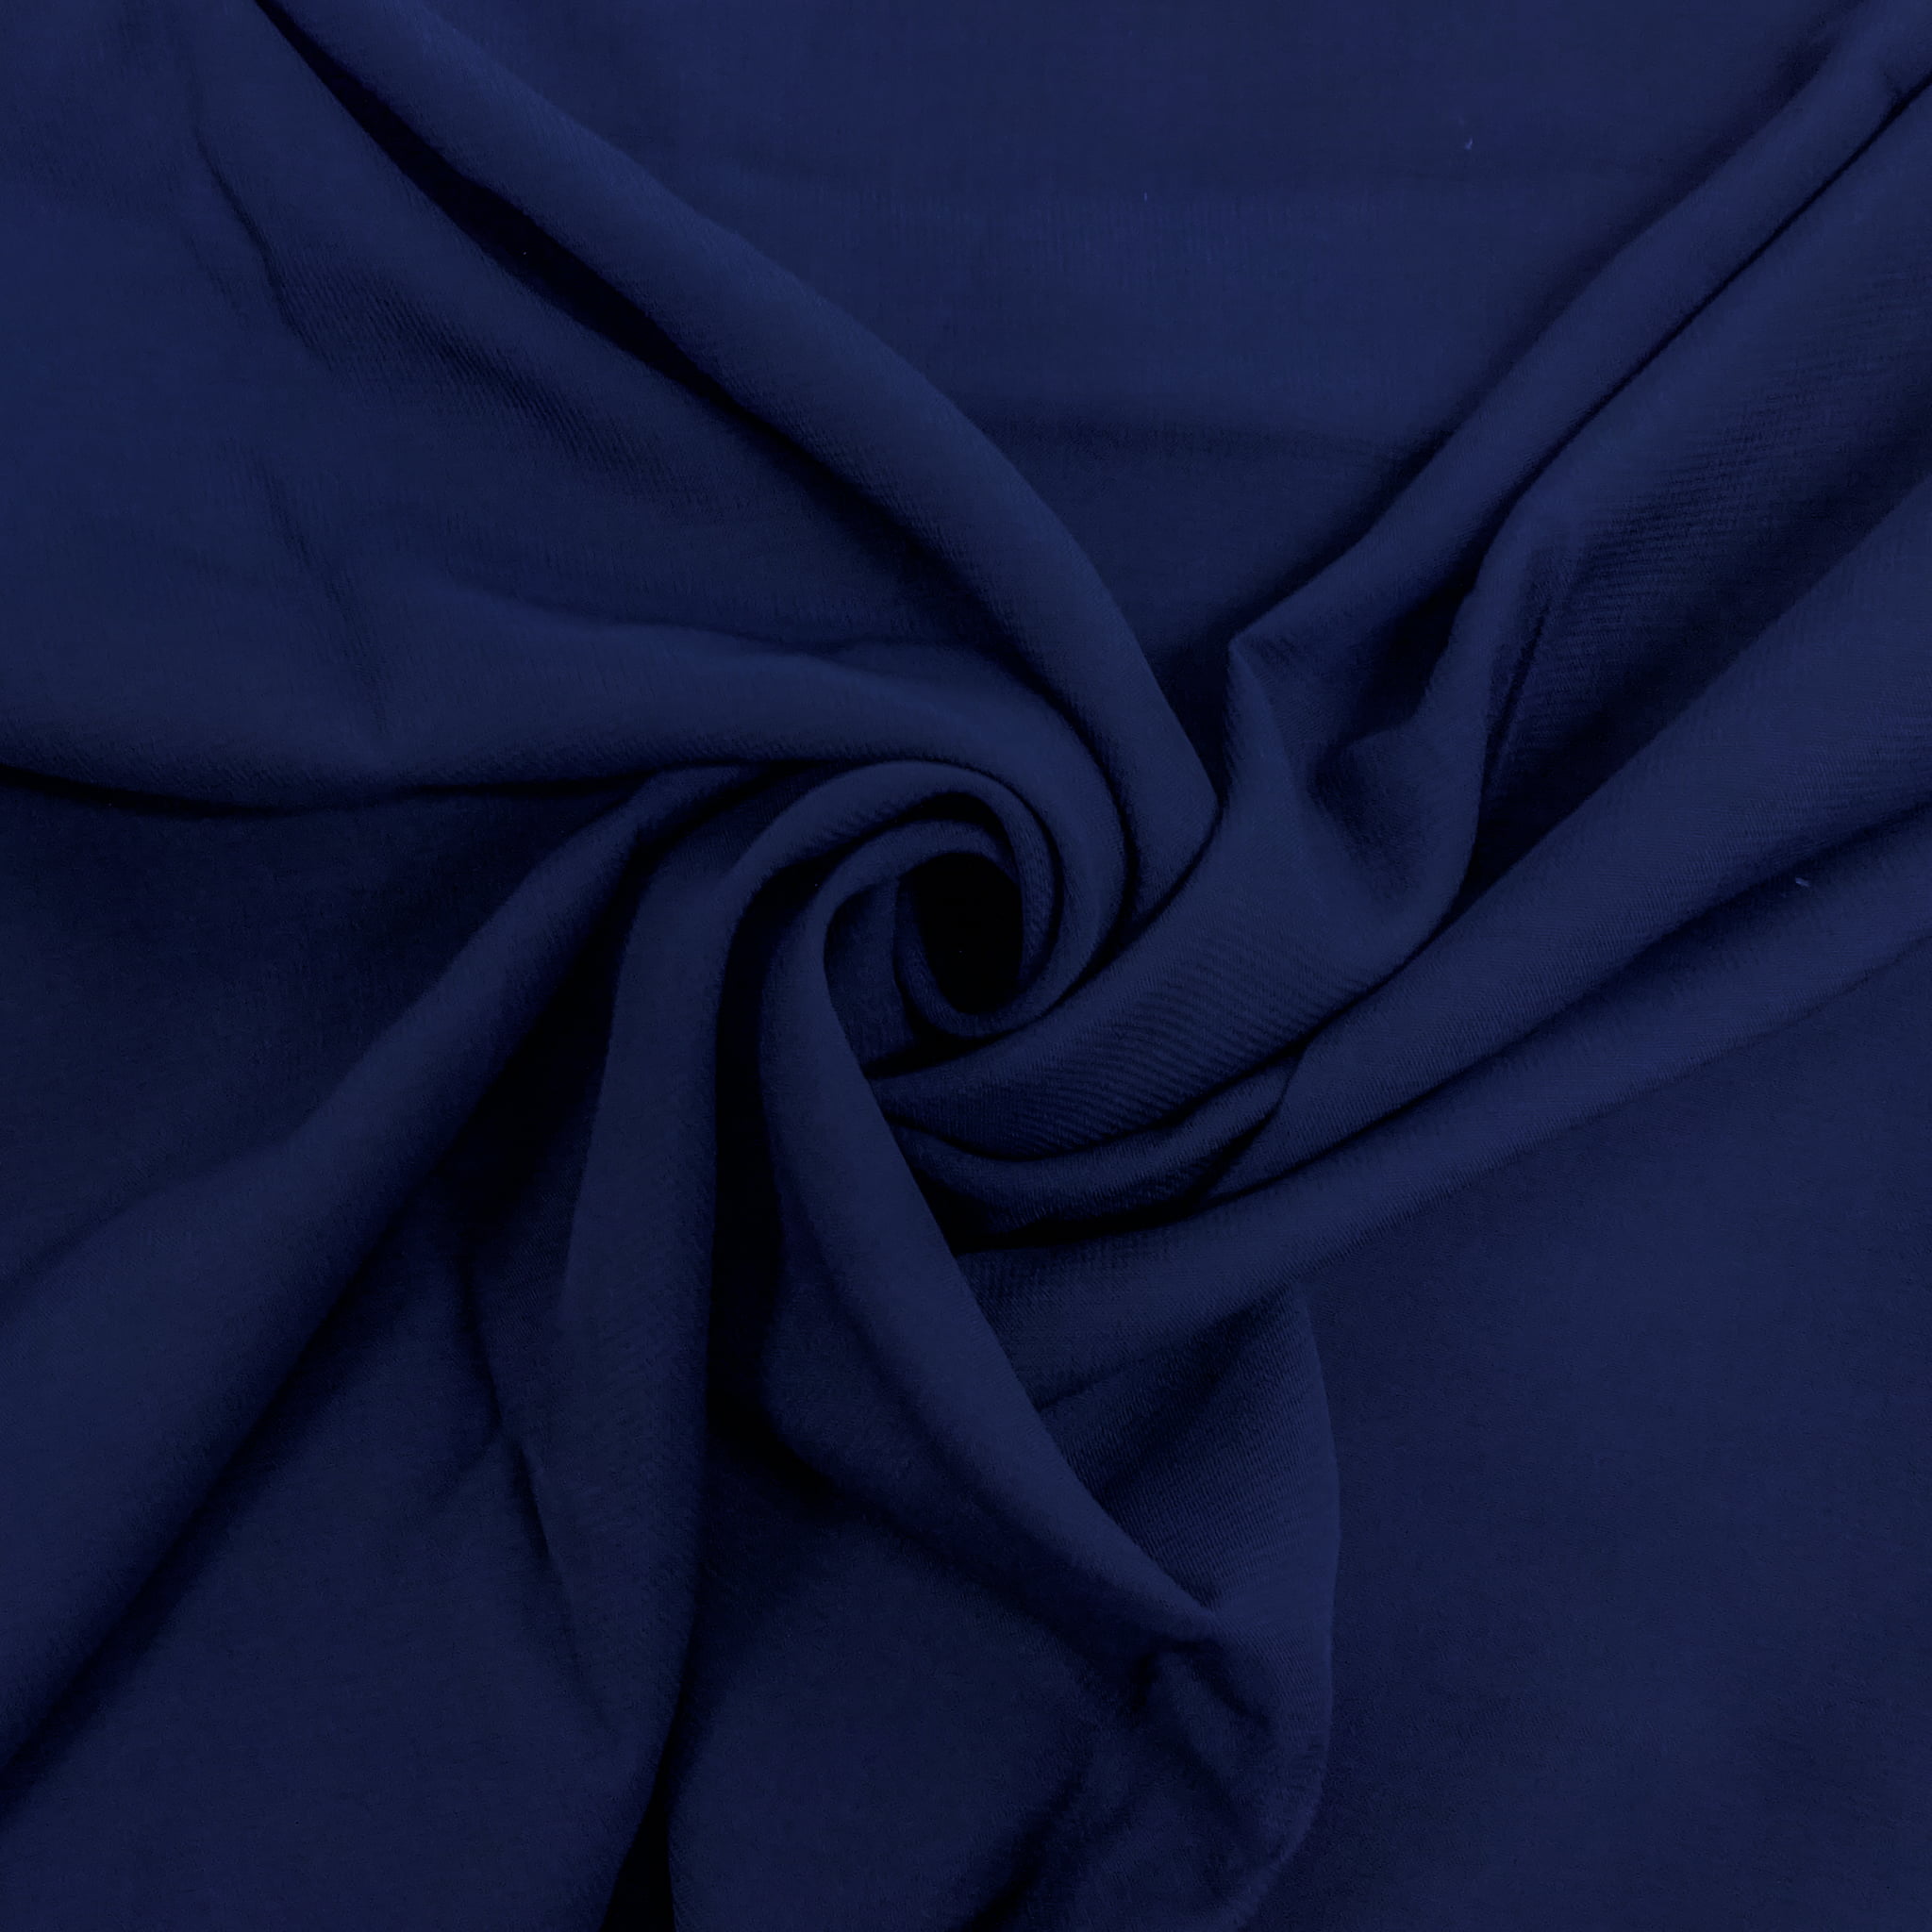 FORMAL WEAR CRAFTS SATIN POLYESTER  60" MARINE BLUE  FABRIC BTY DRESSES 